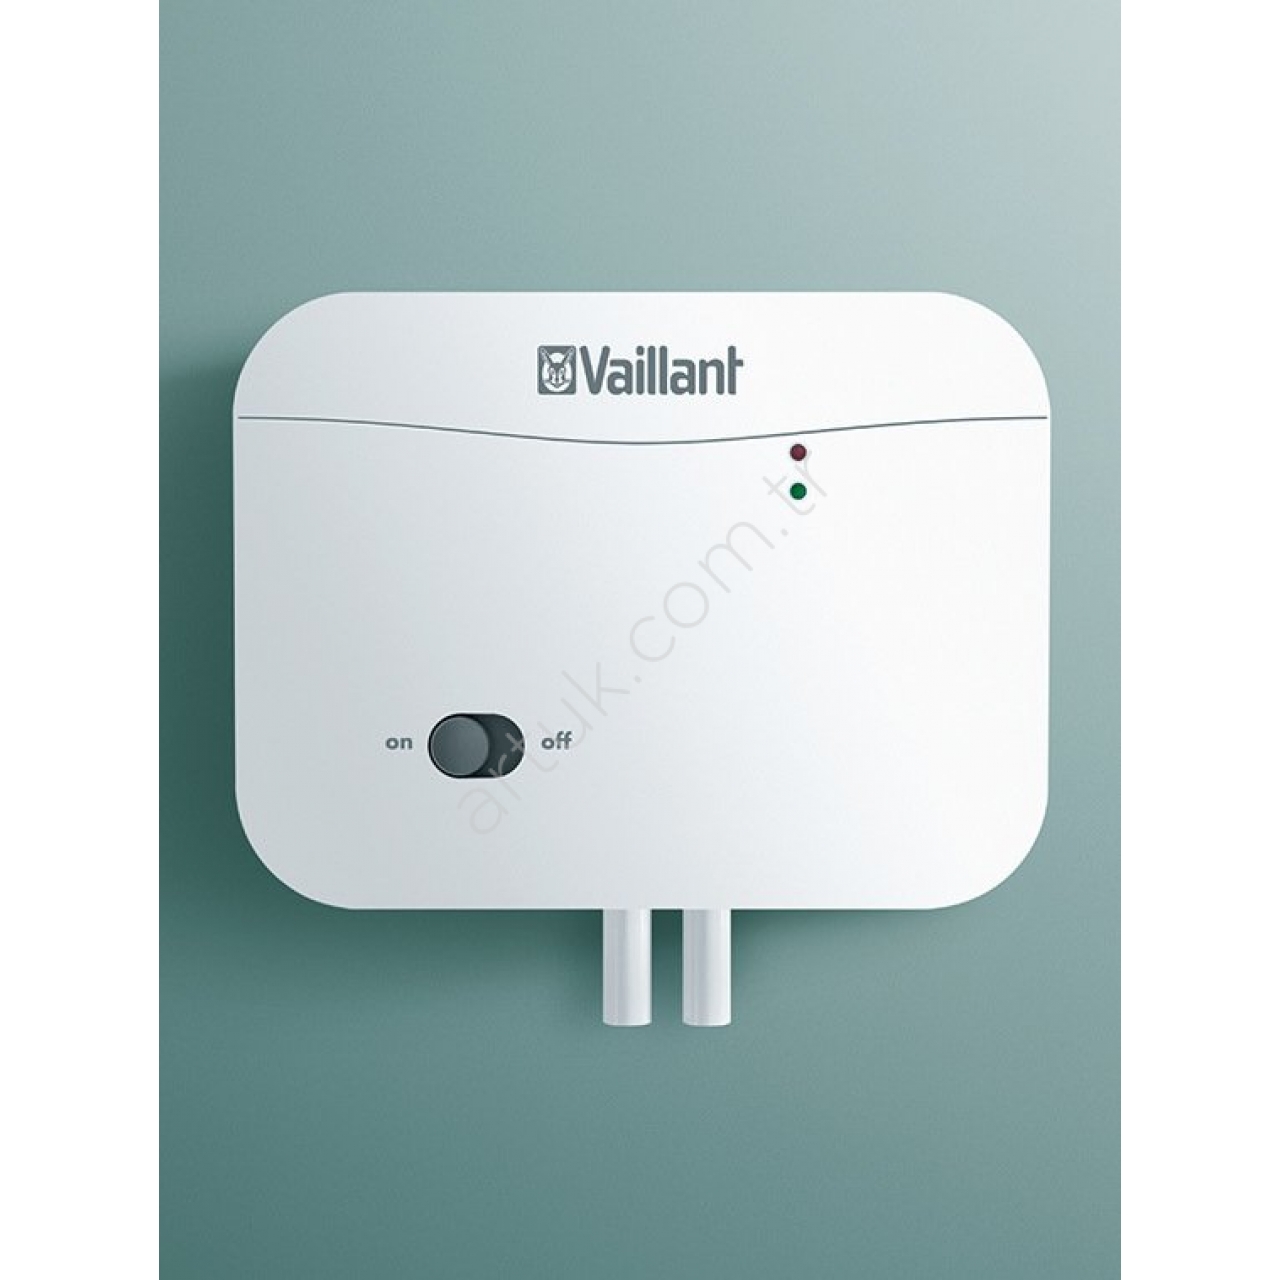 Vaillant Vrt 35 kablolu Dijital On/Of Oda Termostatı  